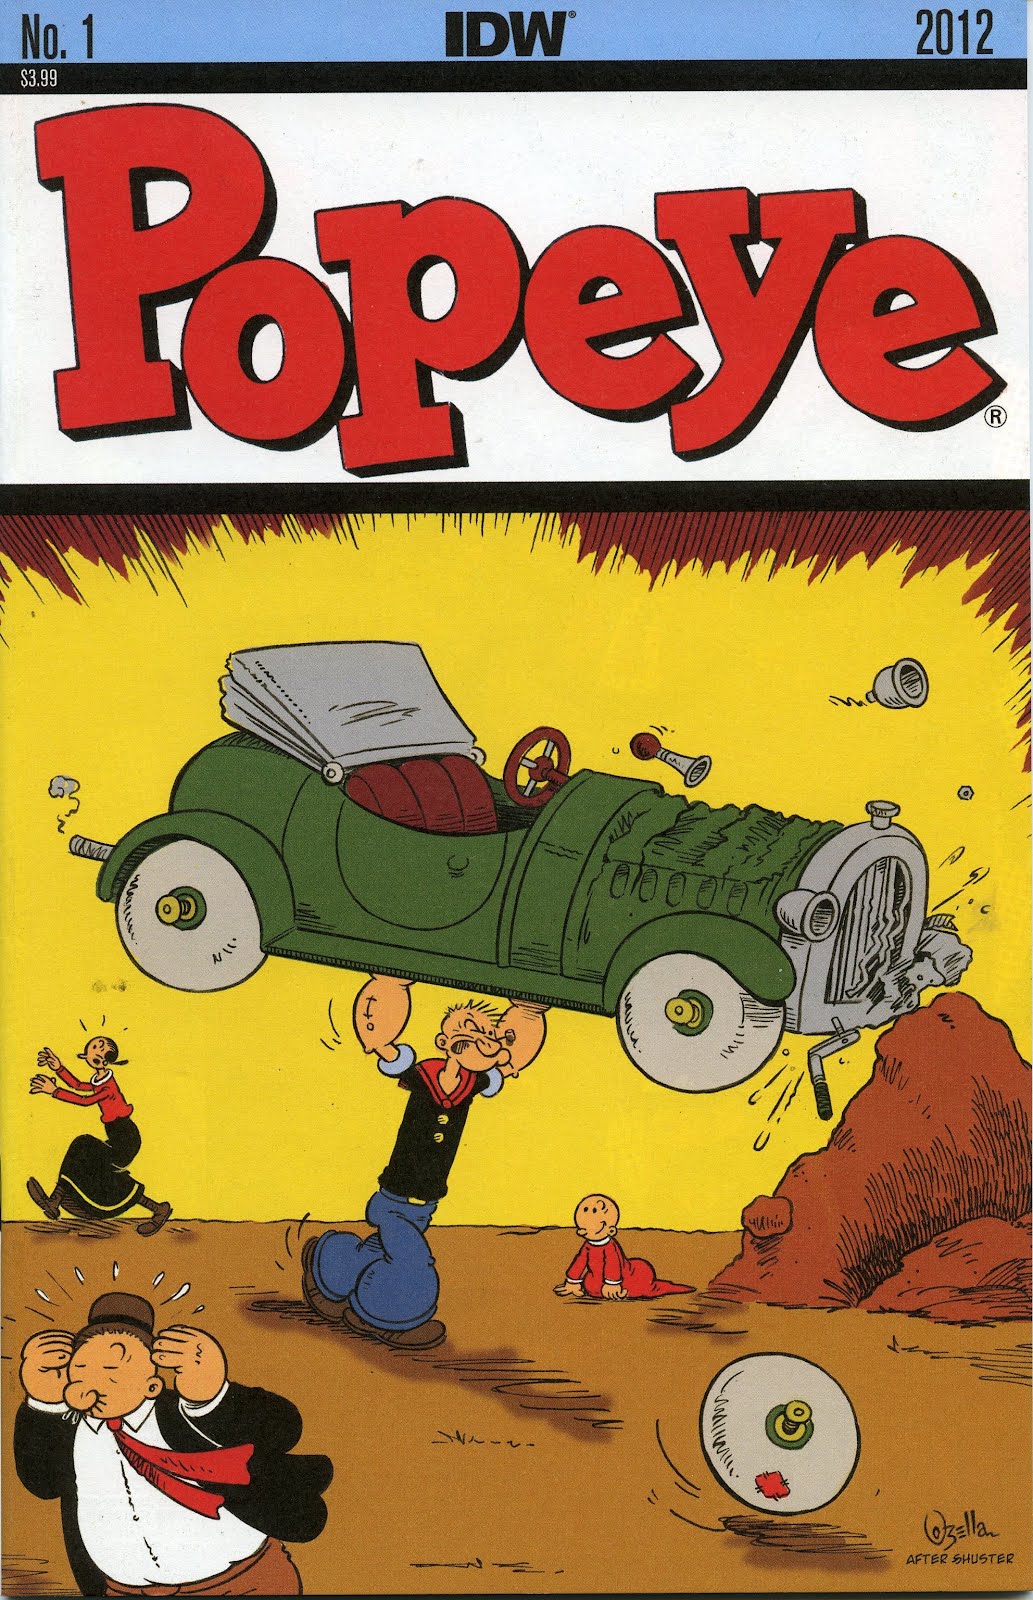 http://2.bp.blogspot.com/-noWH9-K8otA/T-wn4acXR1I/AAAAAAAAM_8/X0sgcUqP9IA/s1600/Popeye+comic+book.jpg